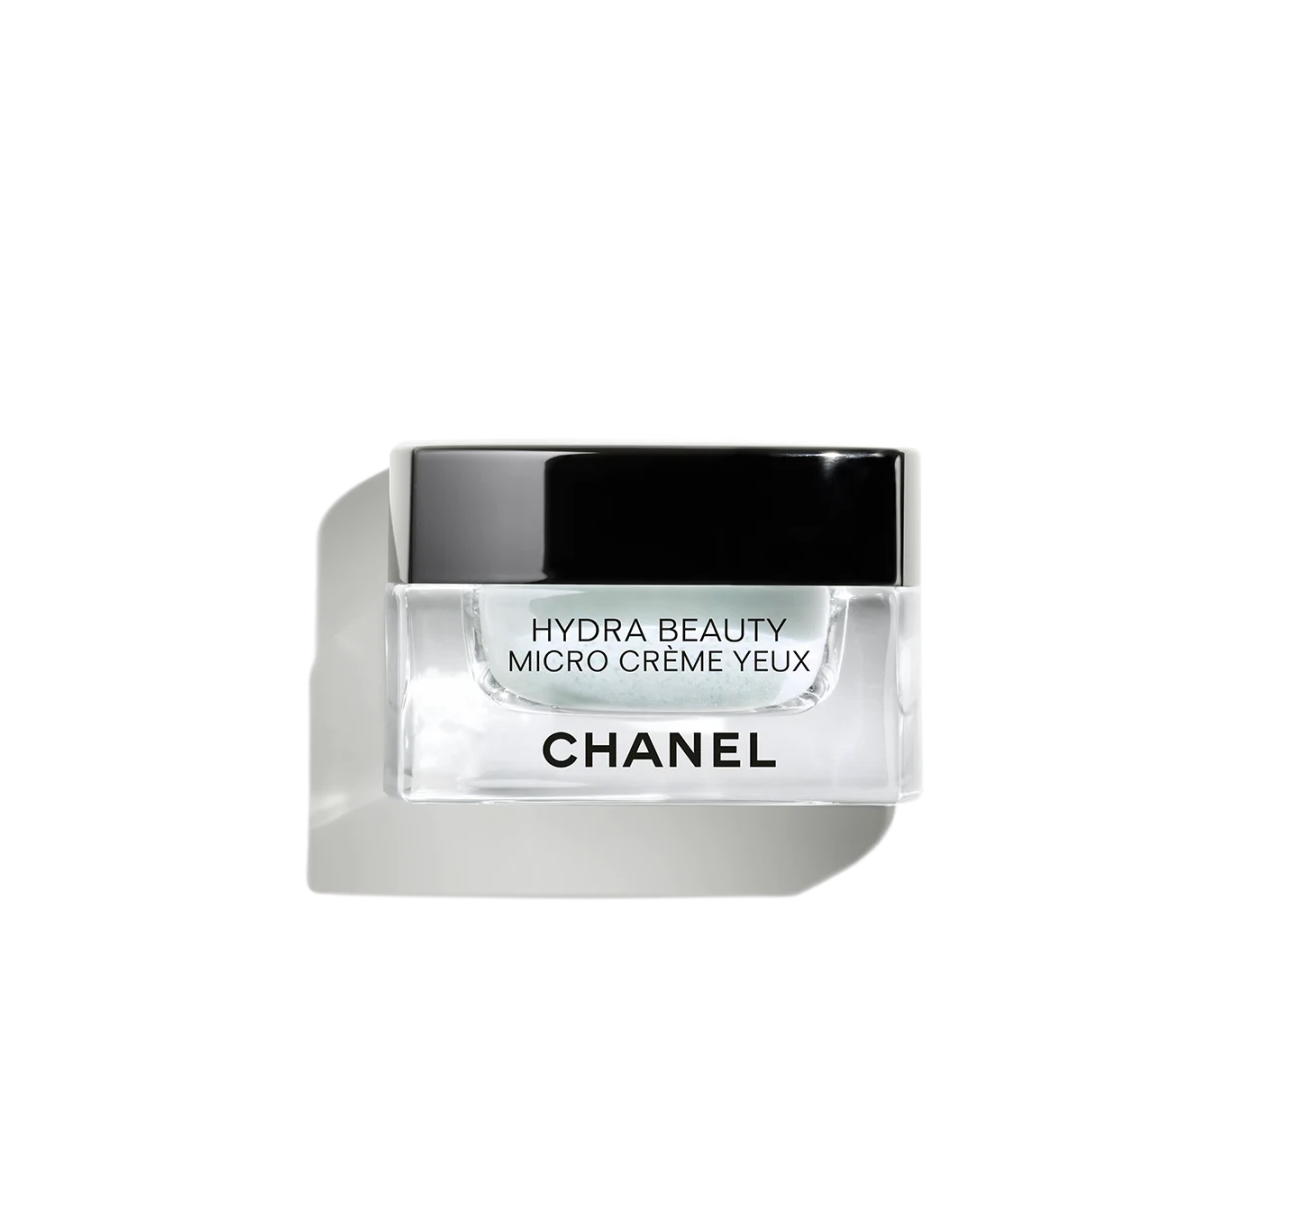 Chanel Hydra Beauty Micro Creme Yeux Illuminating Hydrating Eye Cream